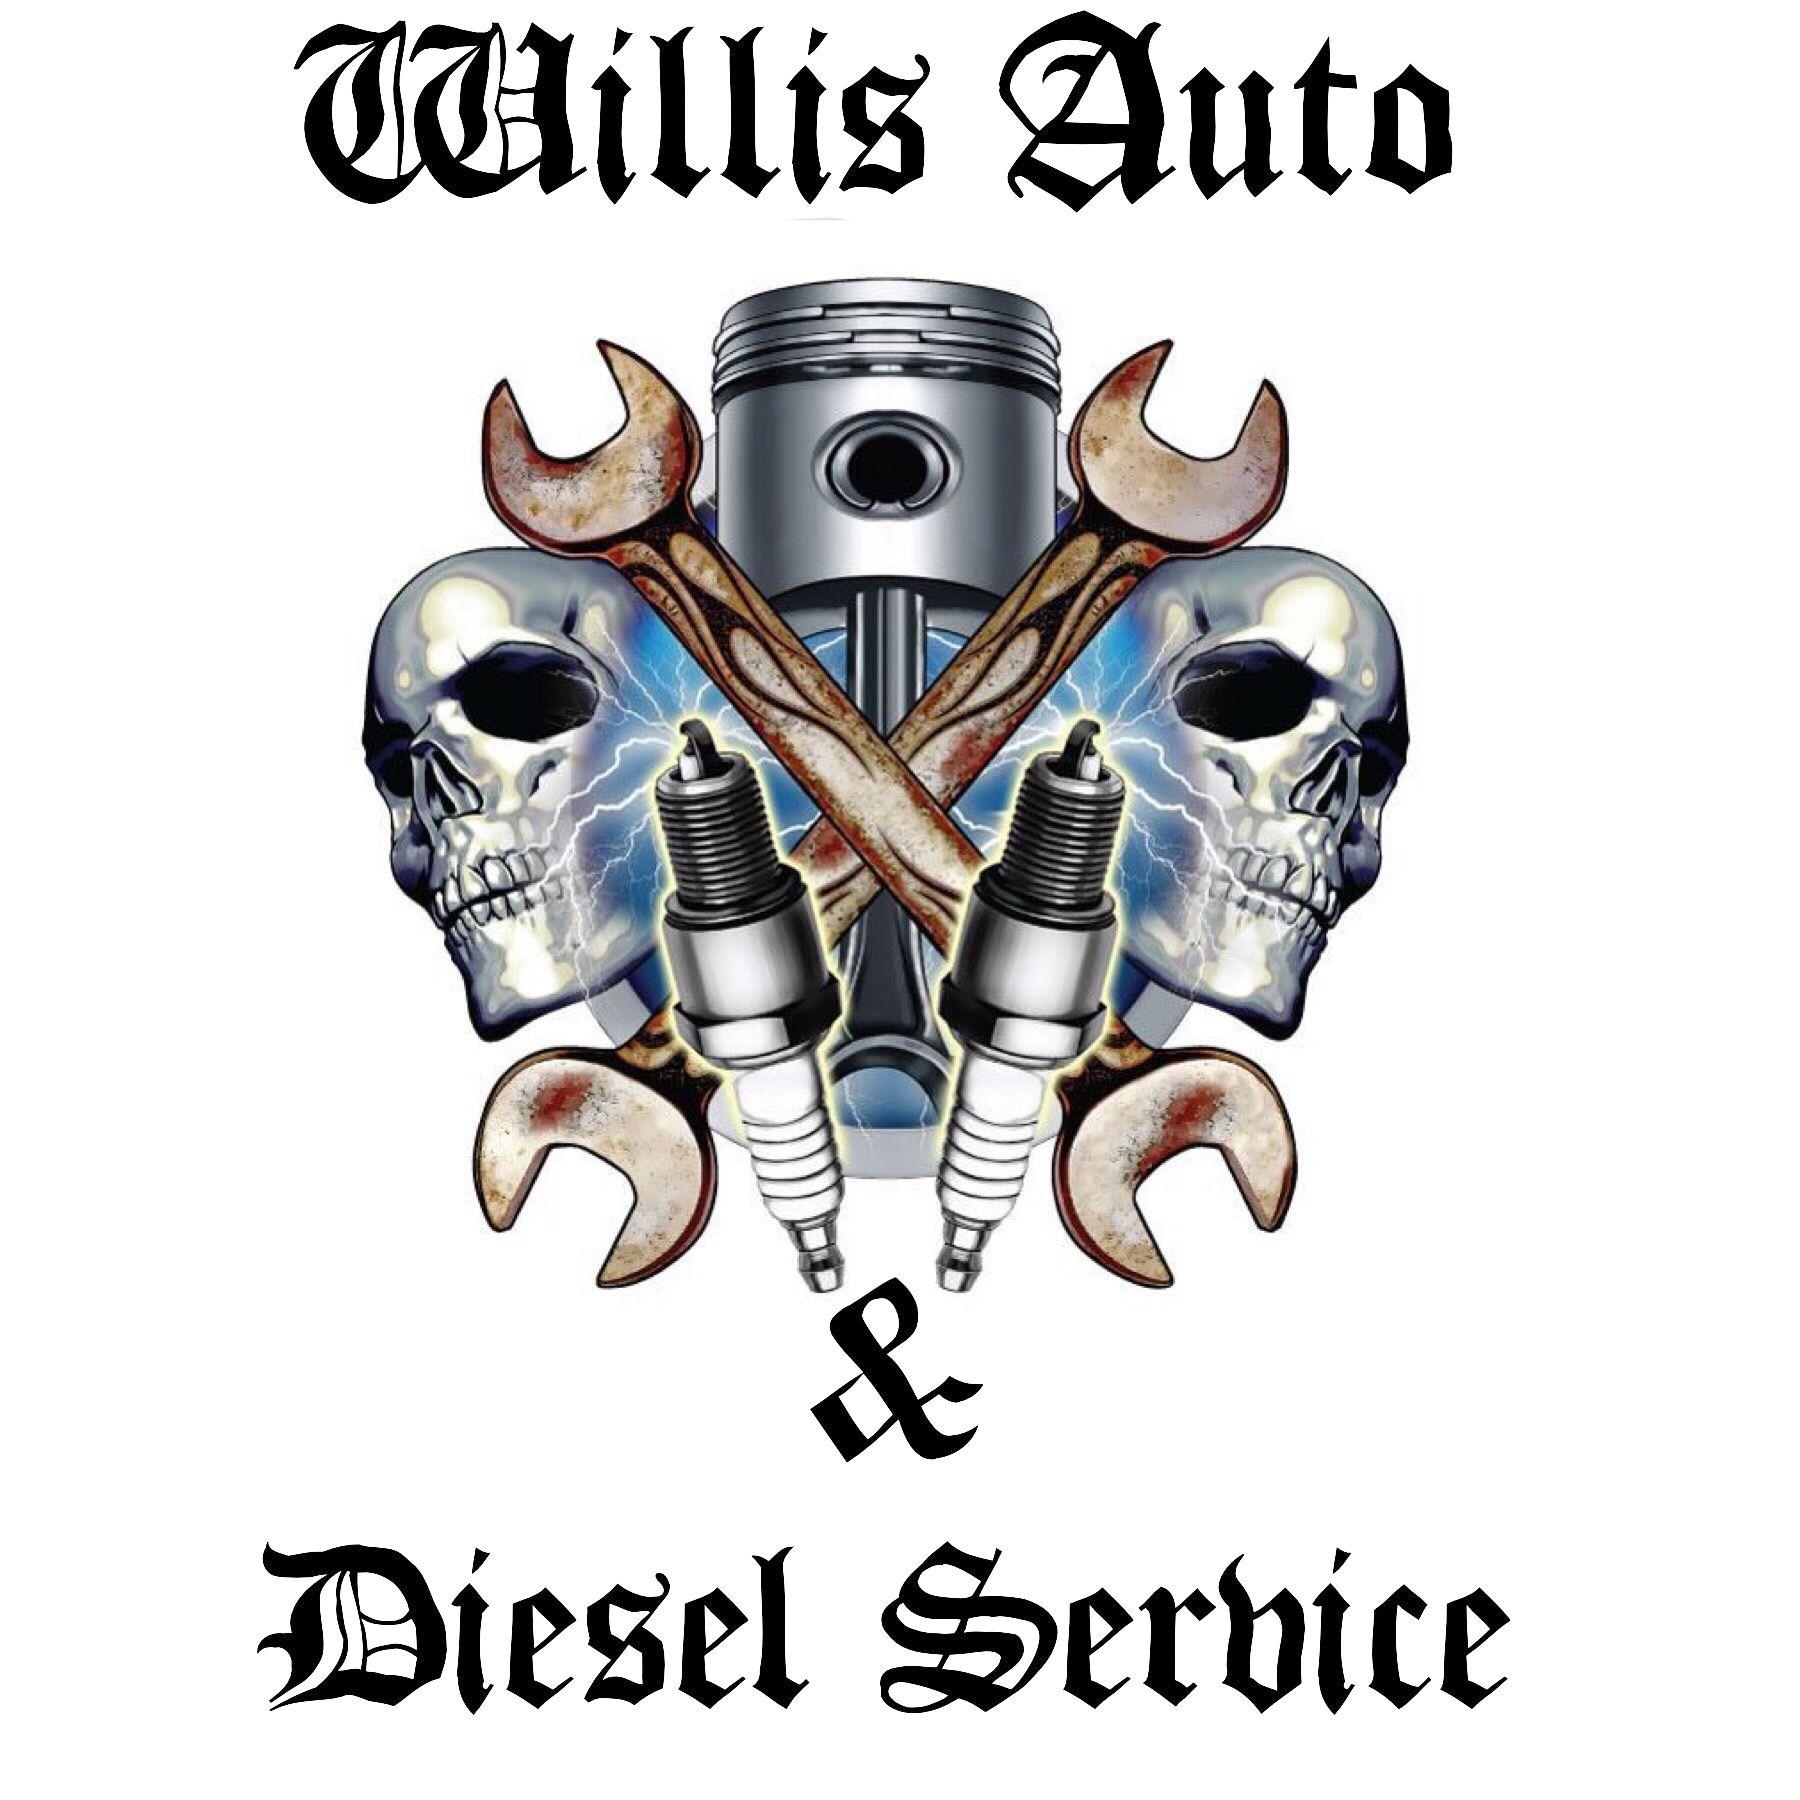 Diesel Mechanic Logo - Willis Auto and Diesel Service – Mechanic in Lubbock